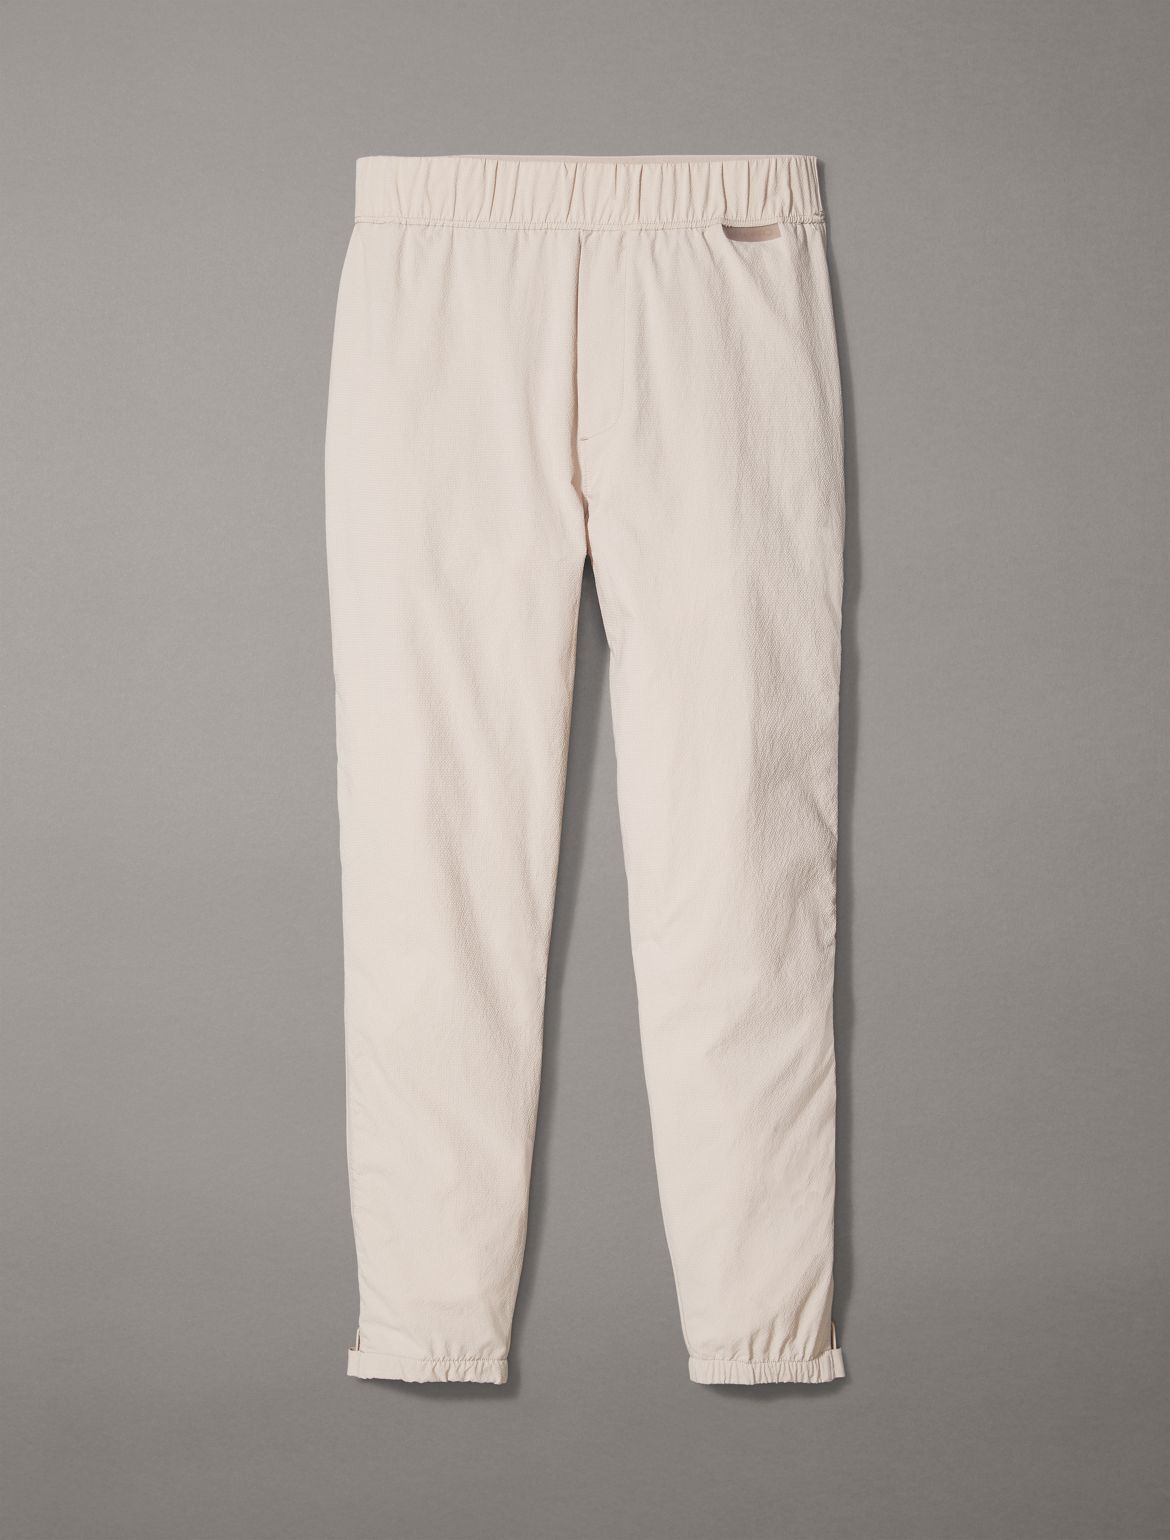 Calvin Klein Men's CK Sport Future Icon Woven Pants - Grey - L